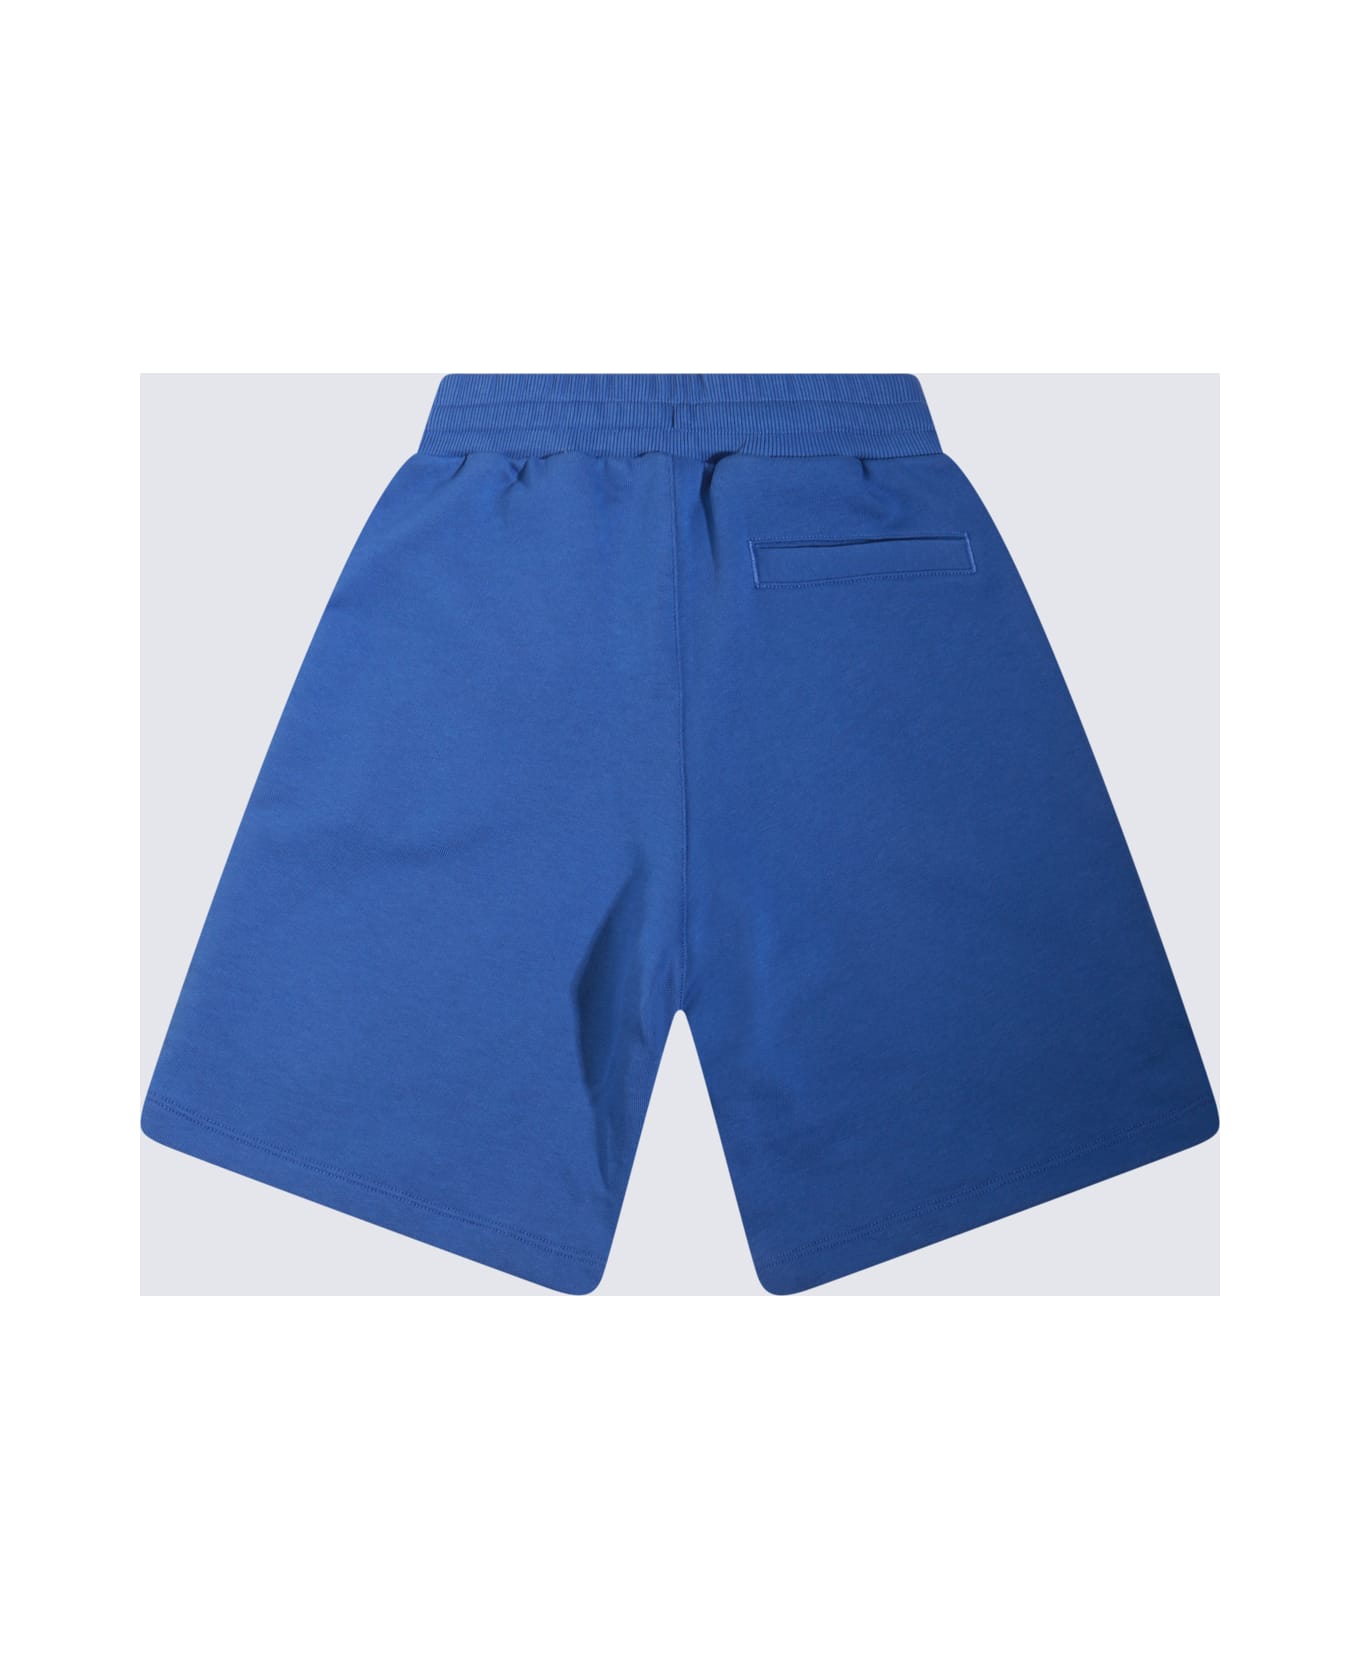 Dolce & Gabbana Blue Cotton Shorts - BLUETTE MEDIO ボトムス